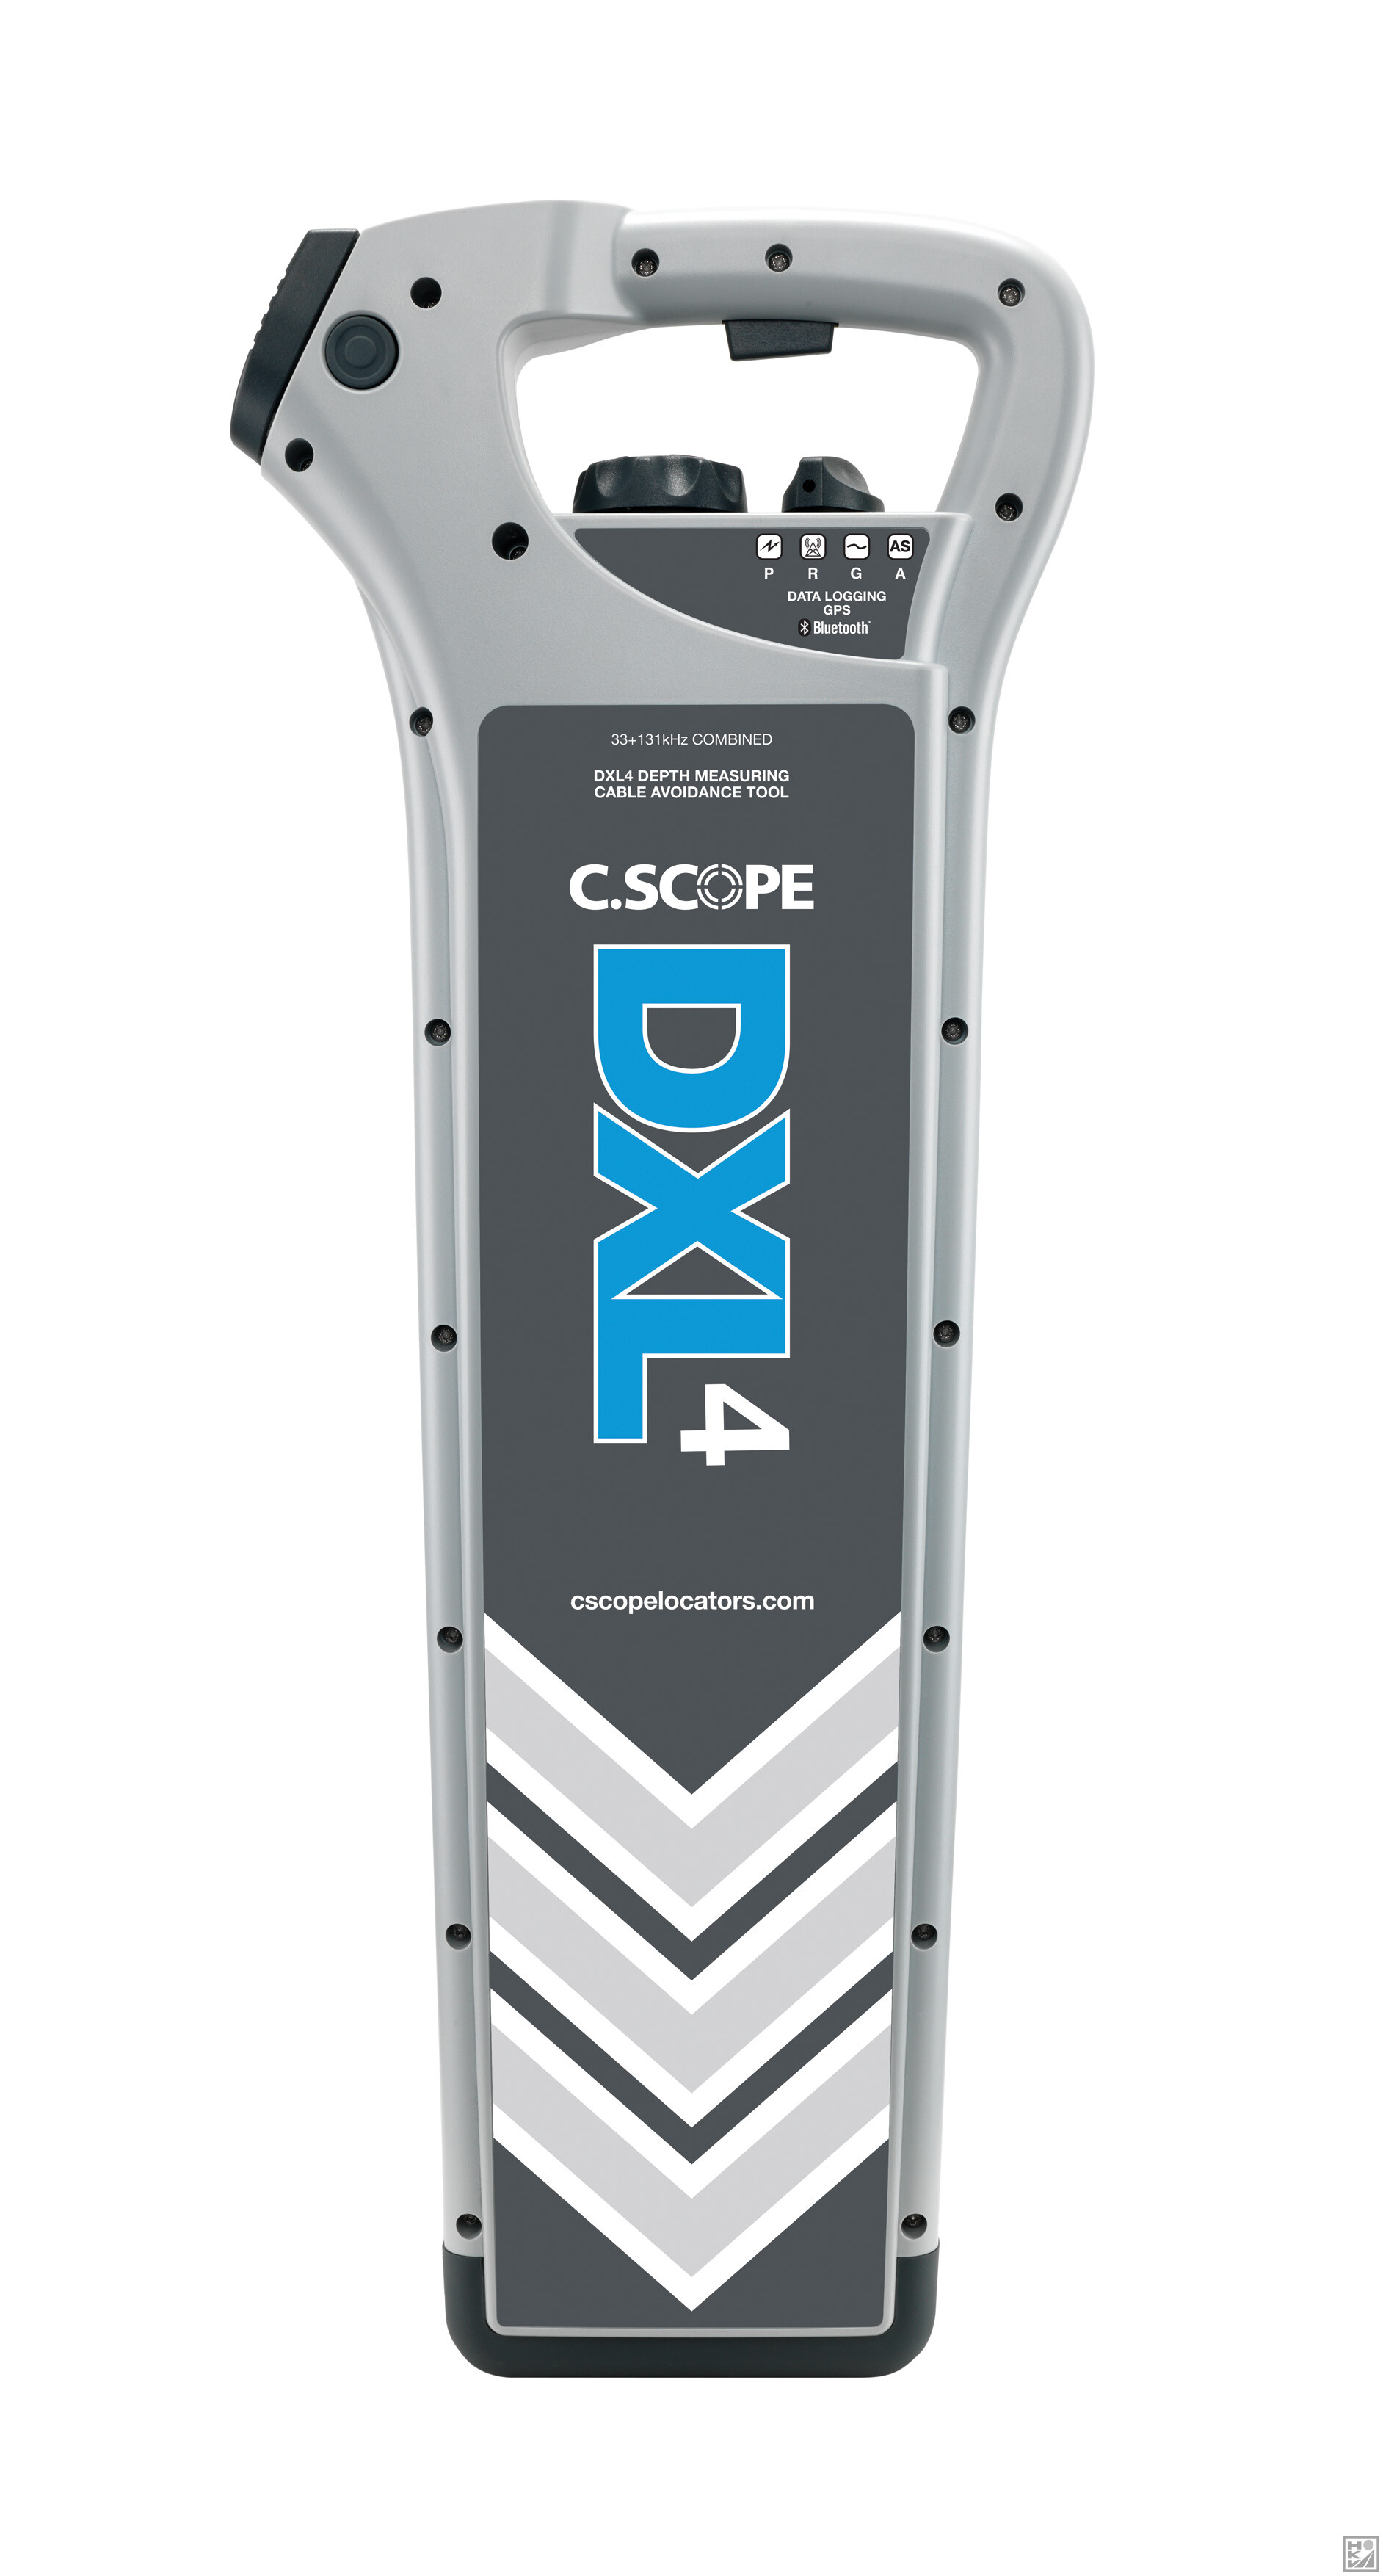 C-Scope DXL4-DBG kabeldetector tweevoudige frequentie